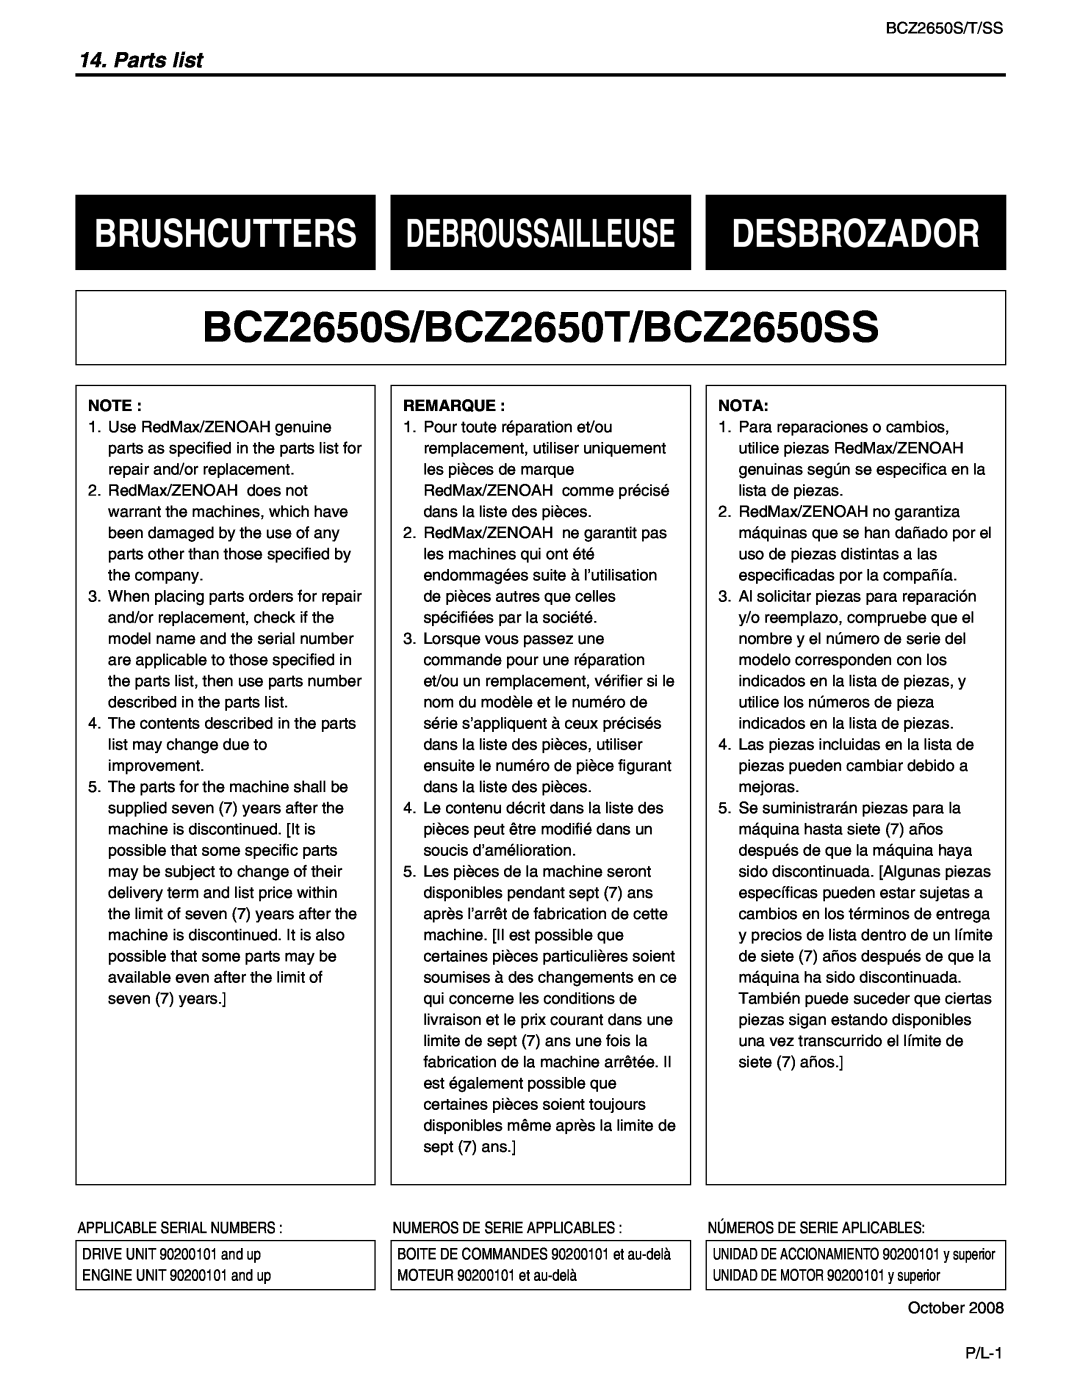 RedMax manual BCZ2650S/BCZ2650T/BCZ2650SS, Brushcutters Debroussailleuse Desbrozador, Parts list 